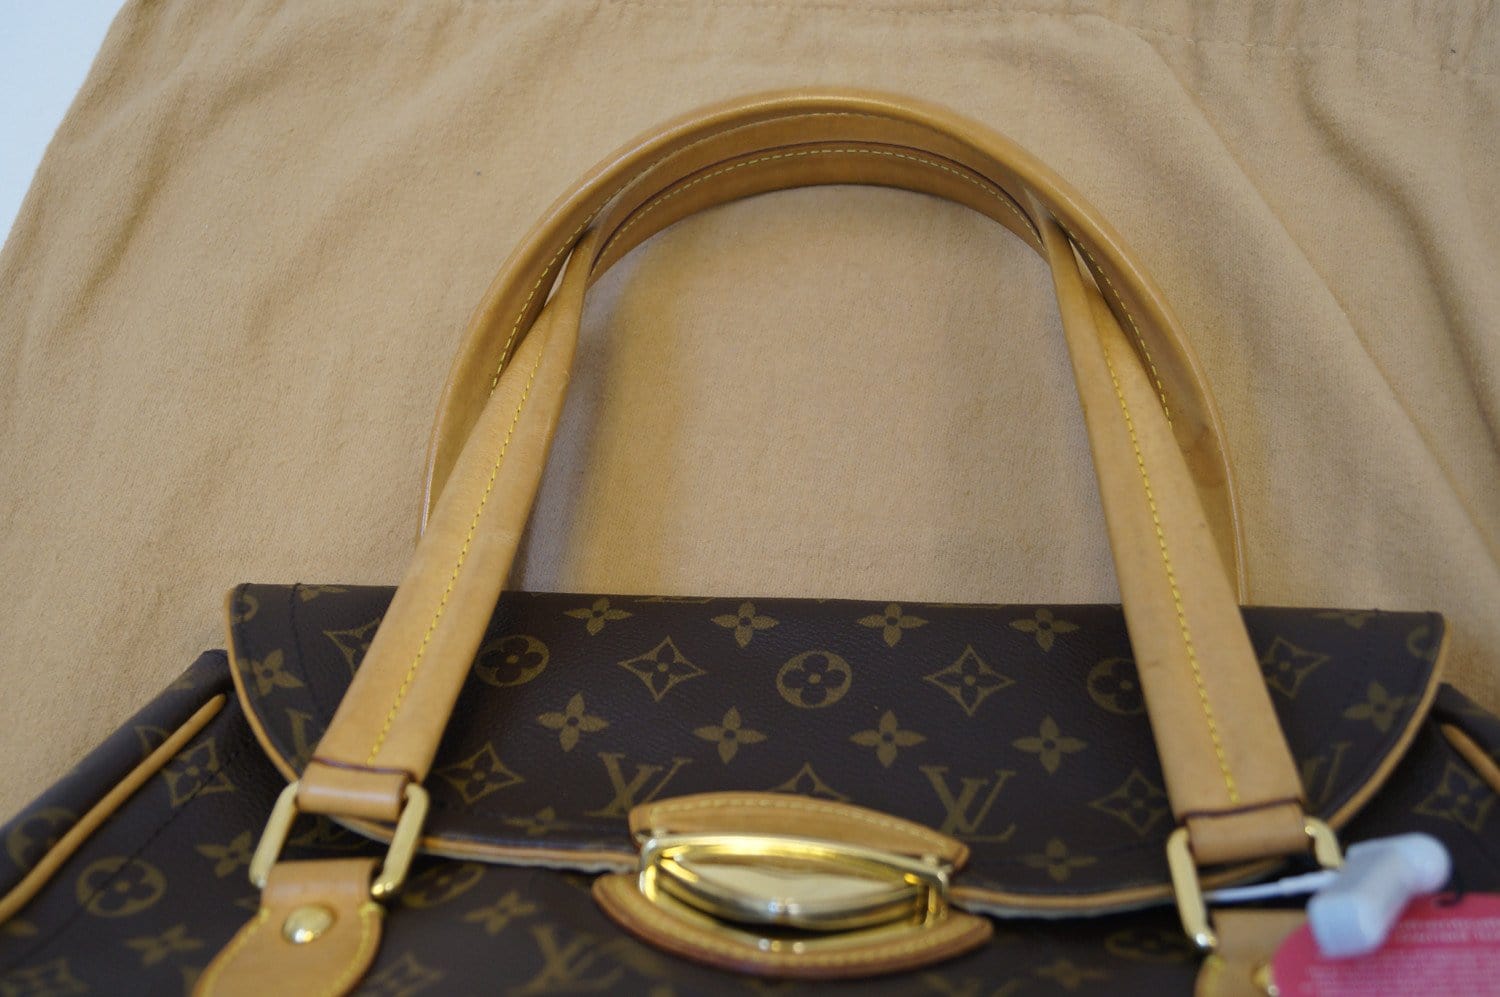 Beverly GM Multicolor – Keeks Designer Handbags